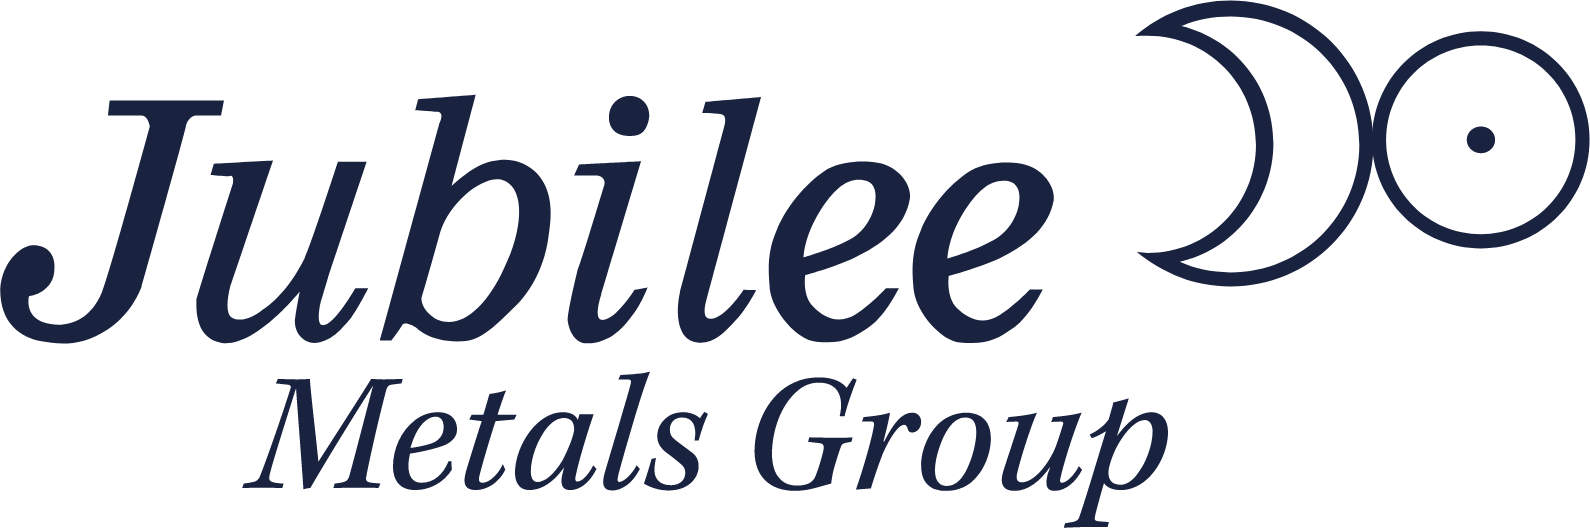 Jubilee Metals Group logo large (transparent PNG)